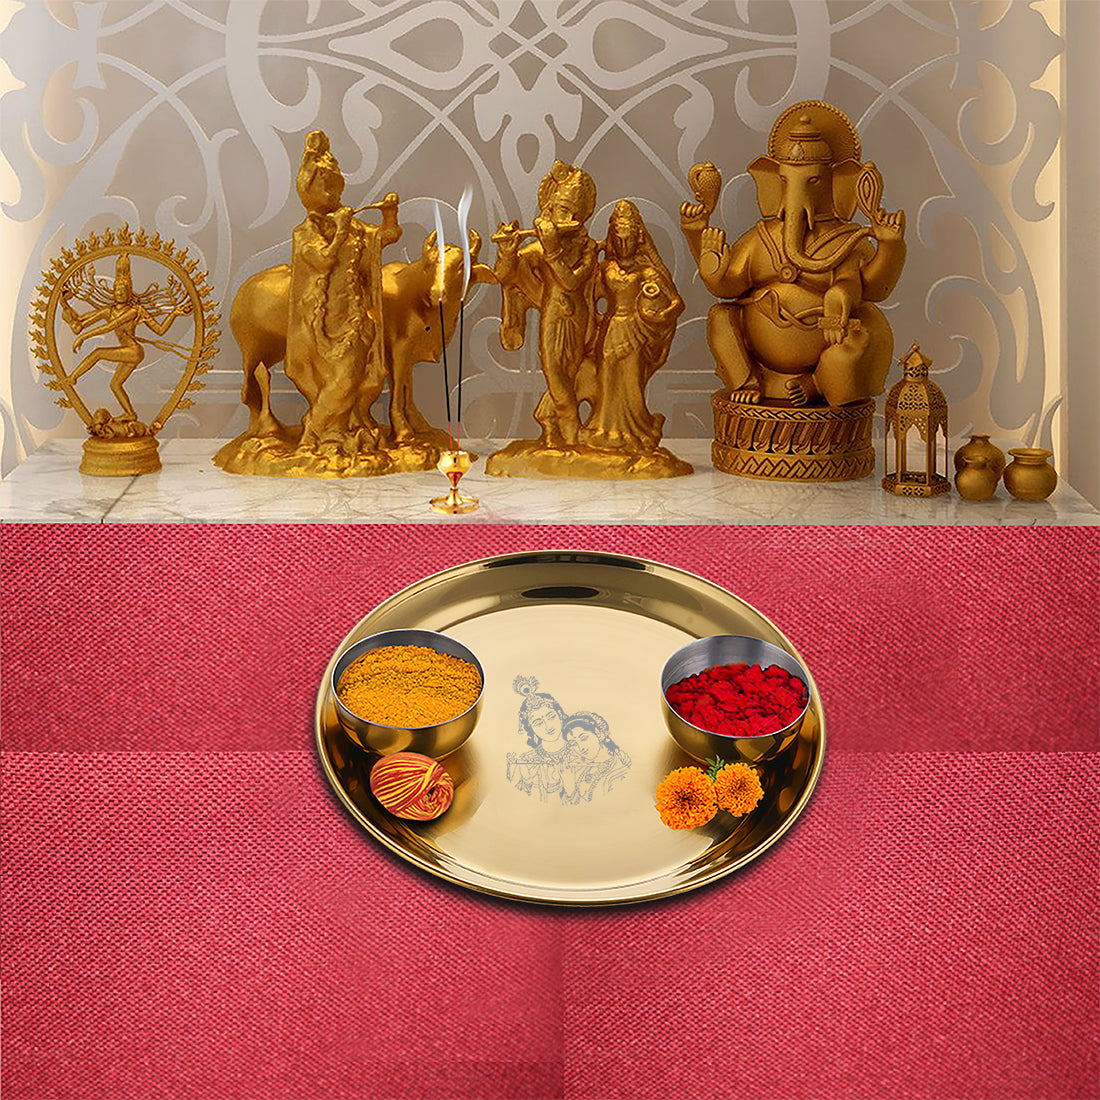 Stainless Steel Pooja Thali Set with Gold PVD Coating Radha Krishna